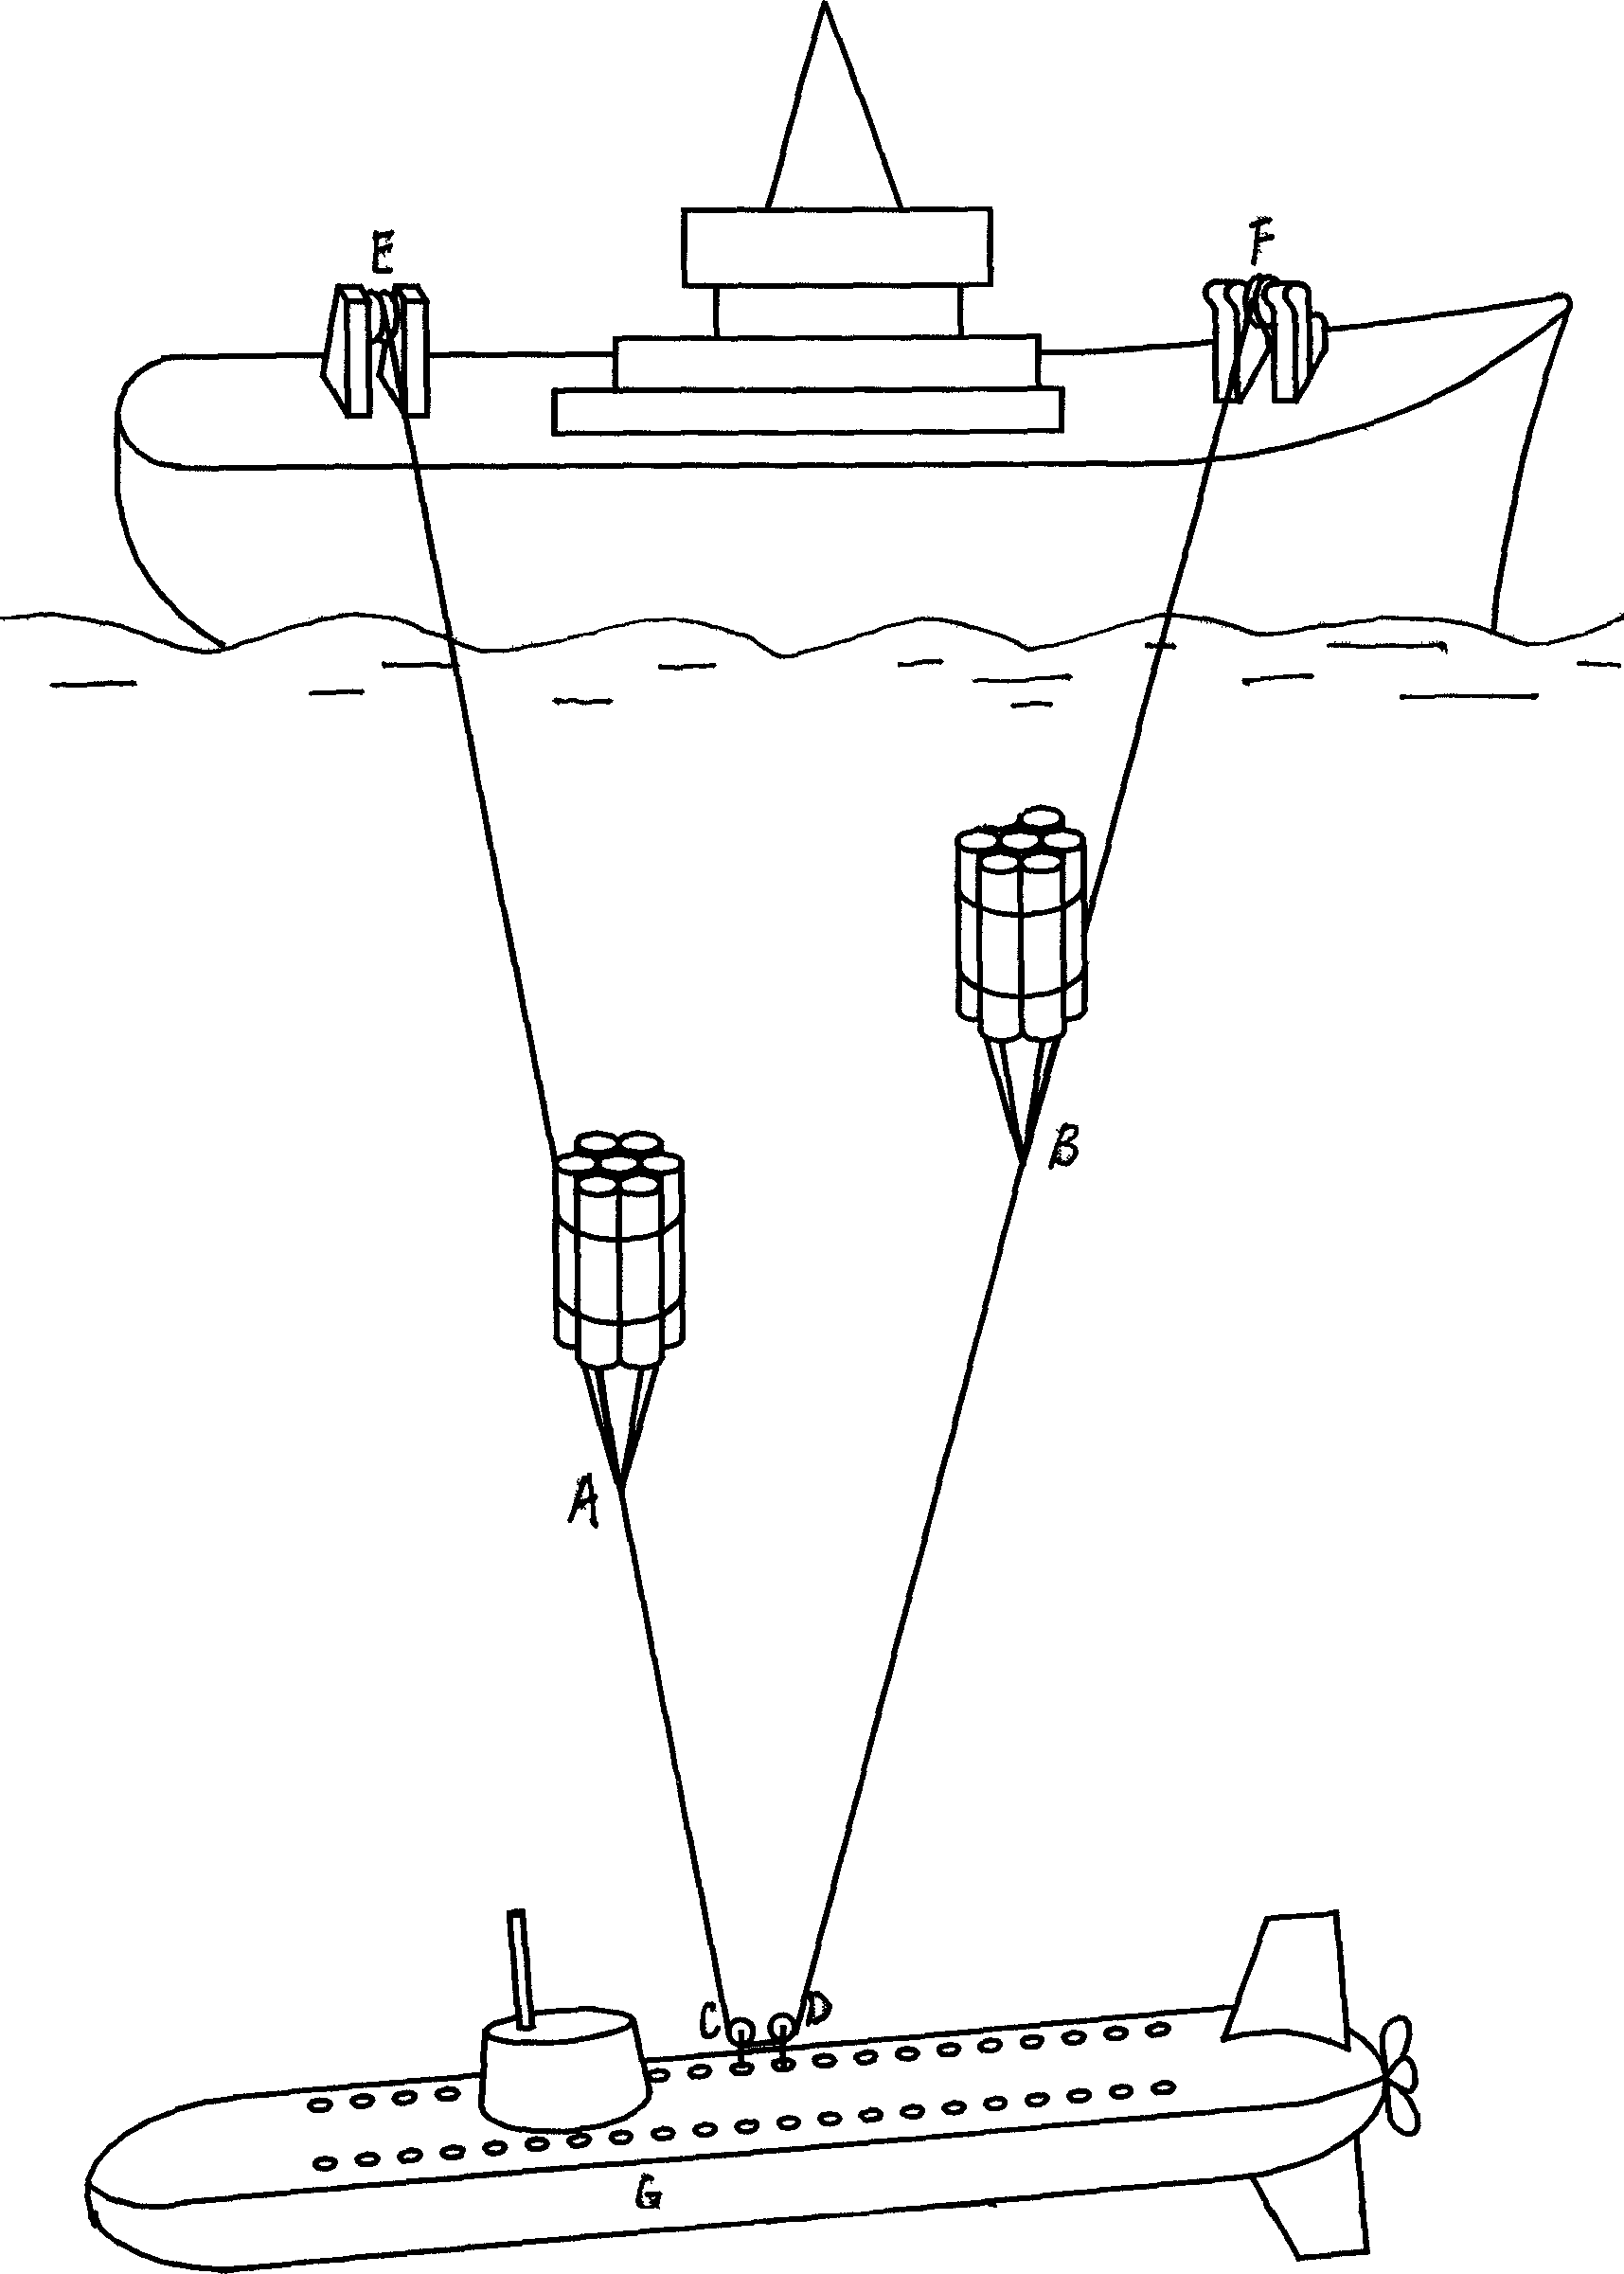 Energy-accumulating hoist method for raising sunken ship or hoisting ultra-long or ultra-weight object